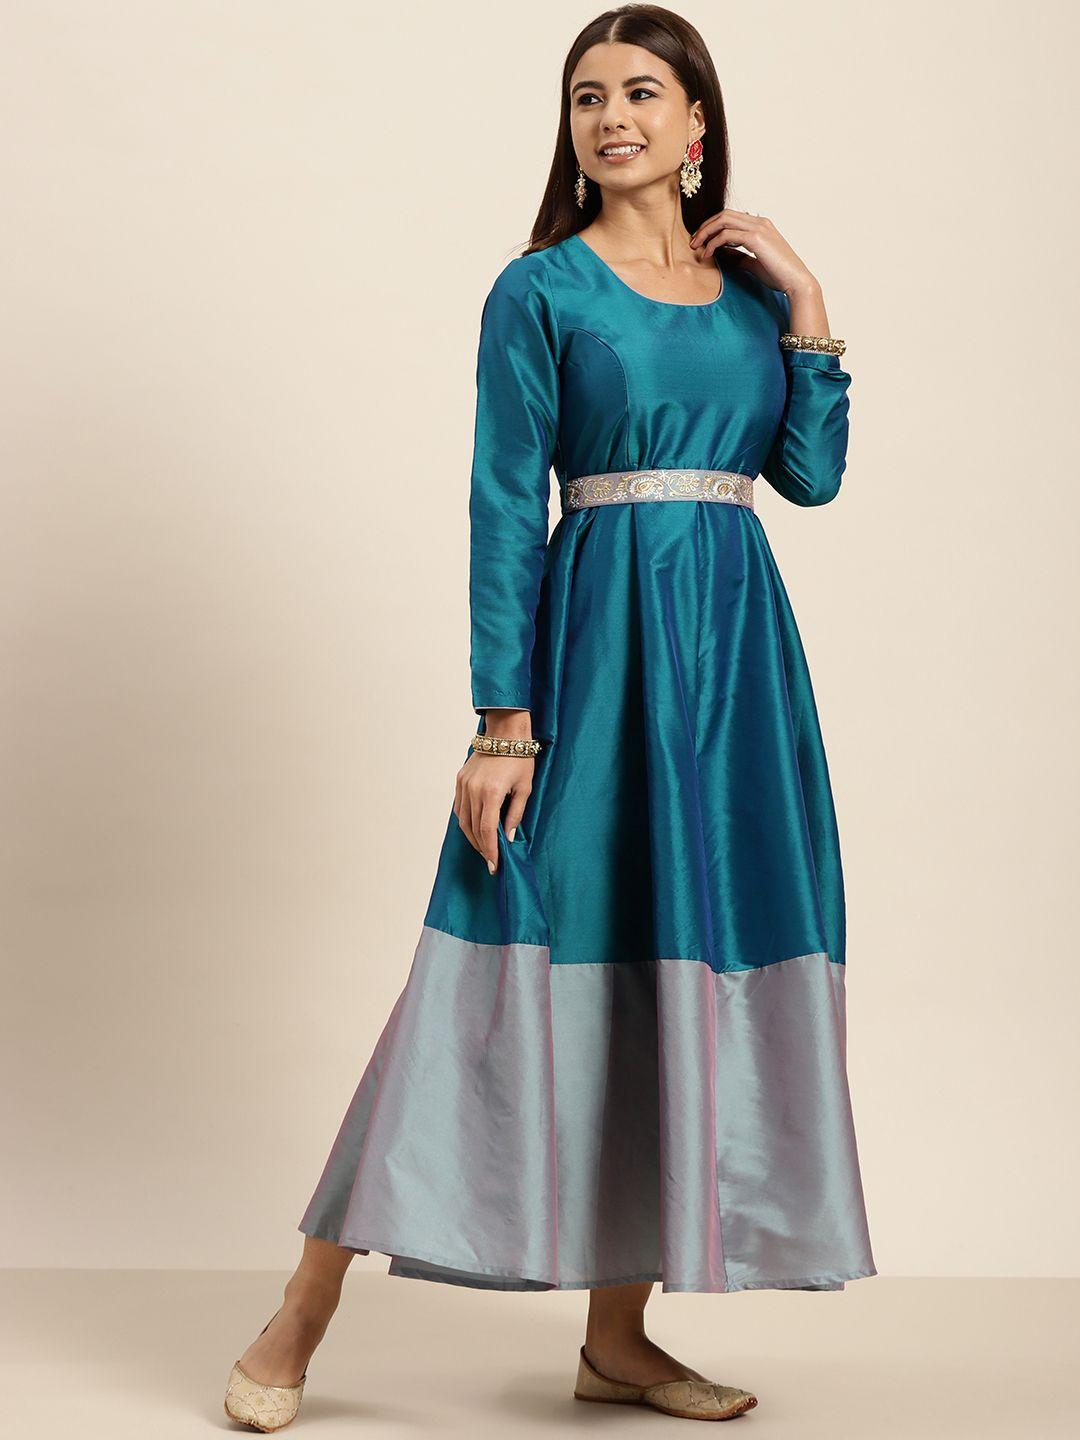 shae by sassafras women tranquil teal colourblocked dress